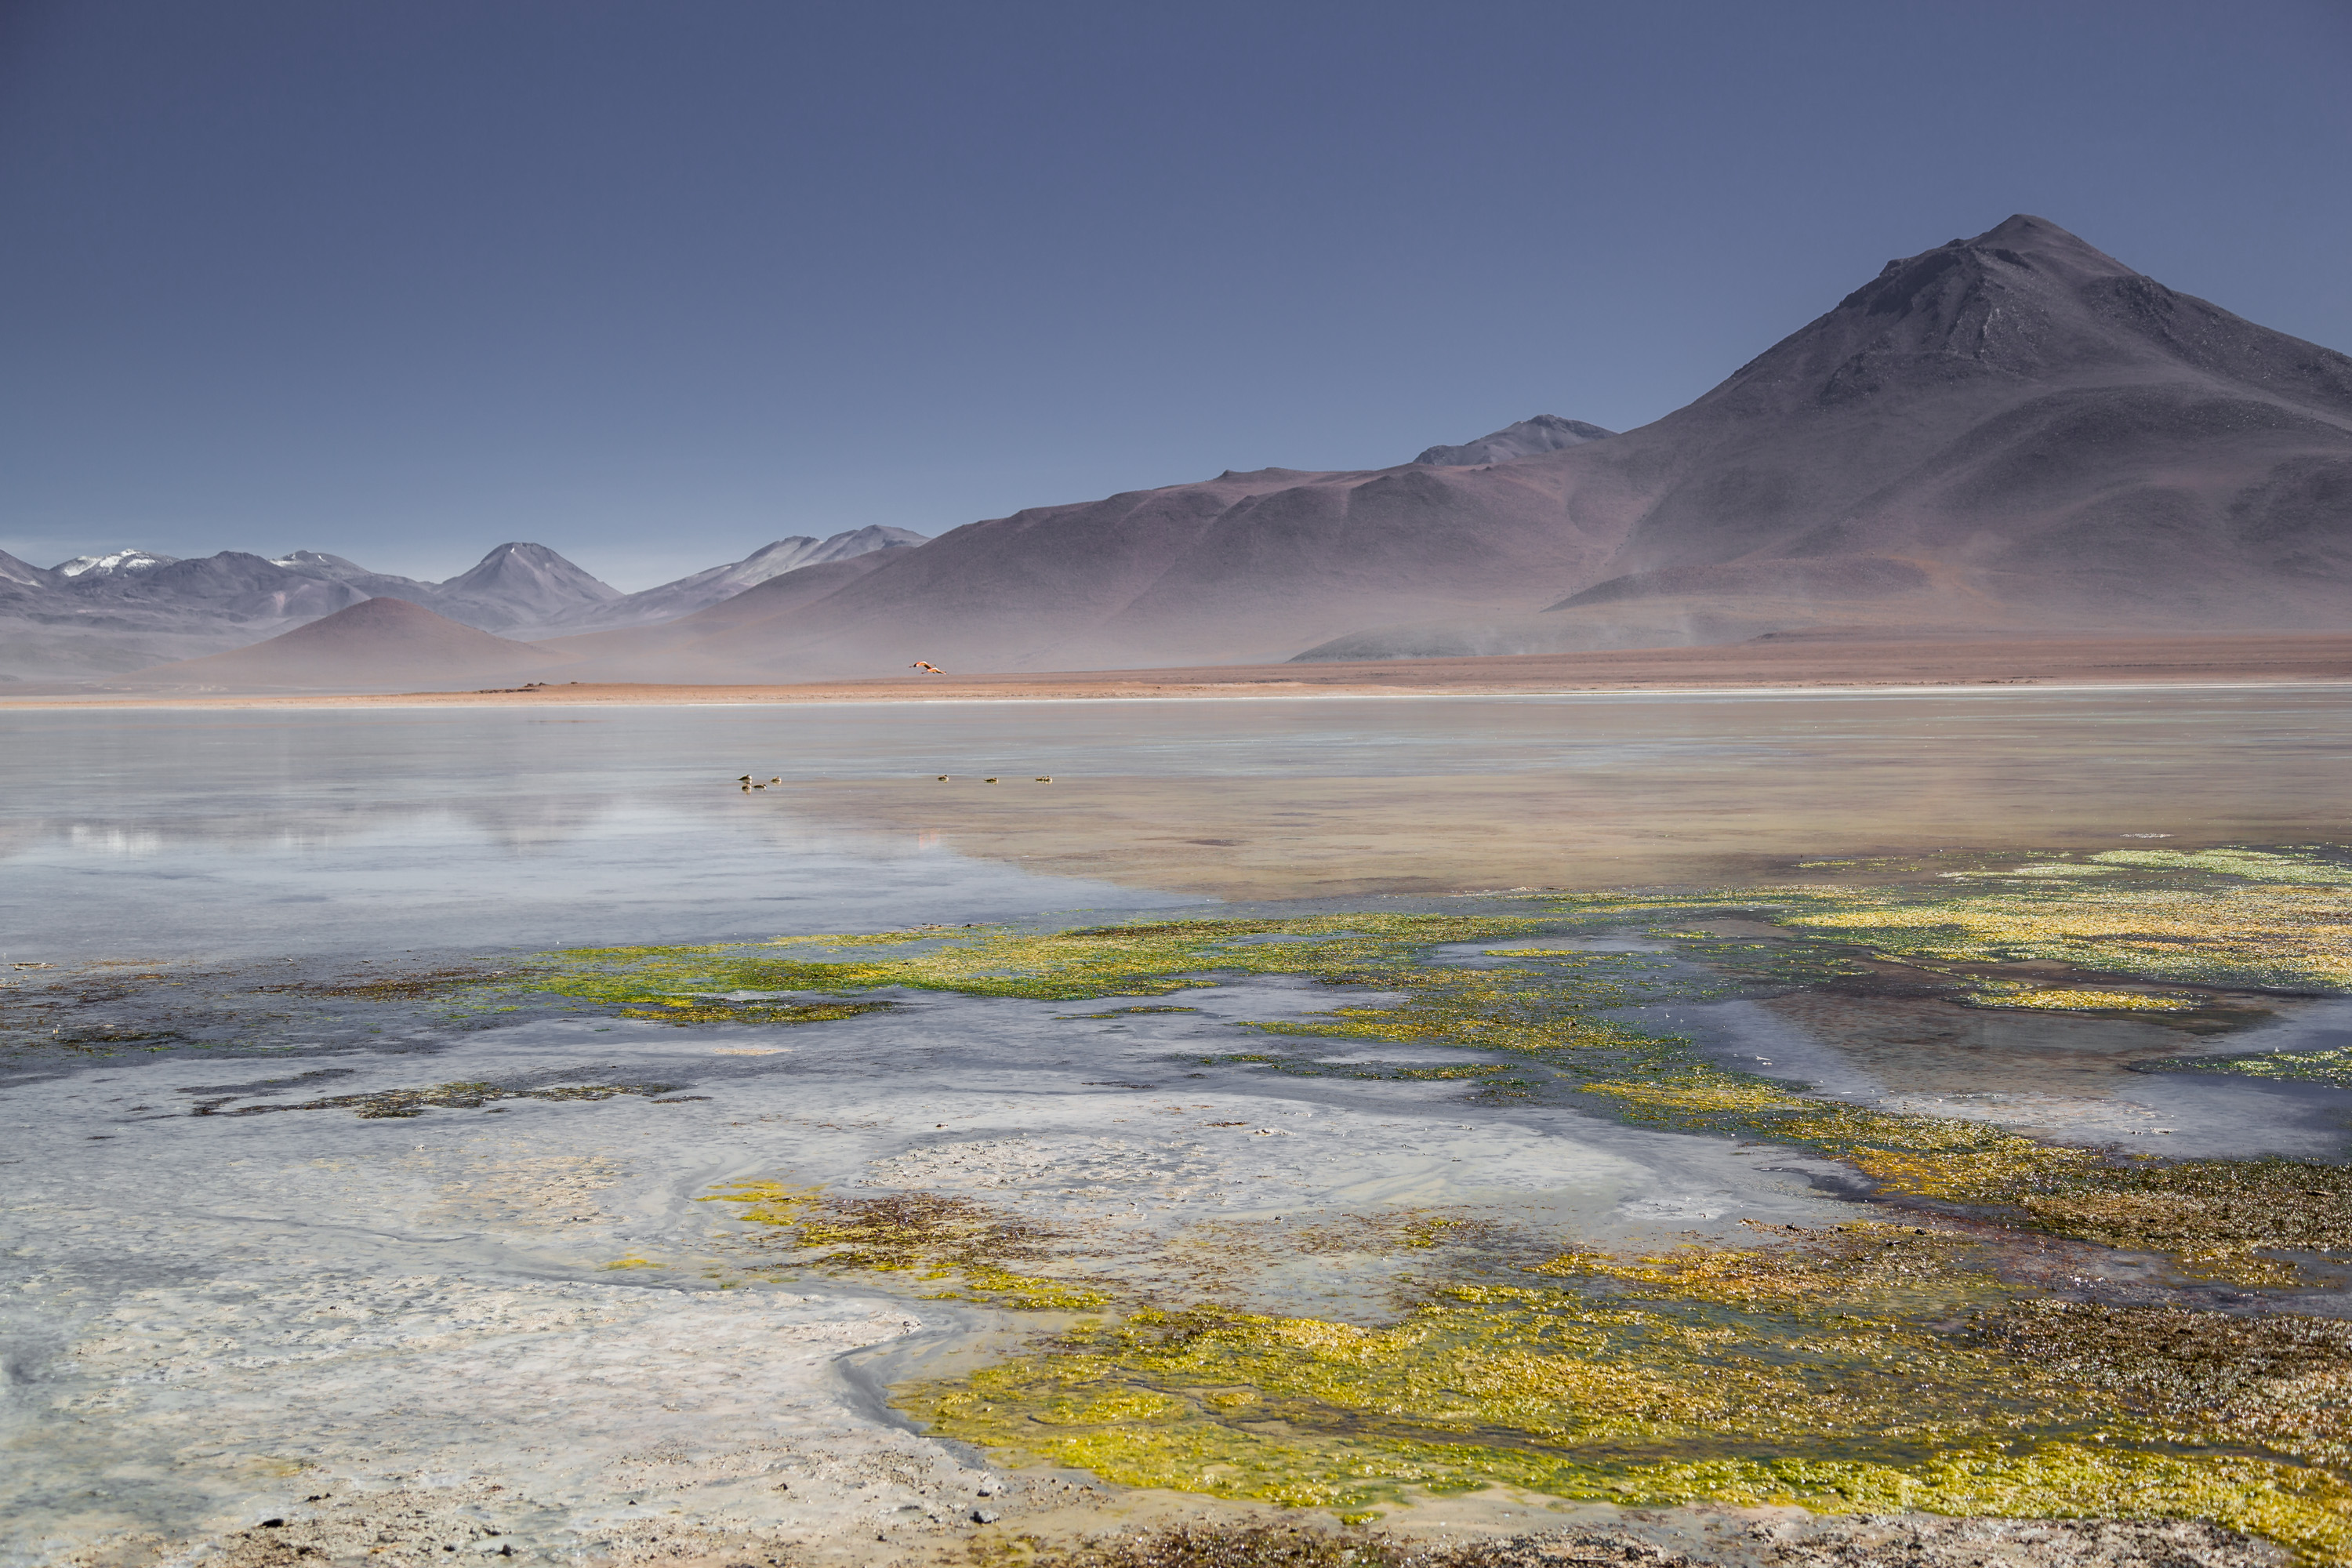 Uyuni salt flats & Desert of Bolivia